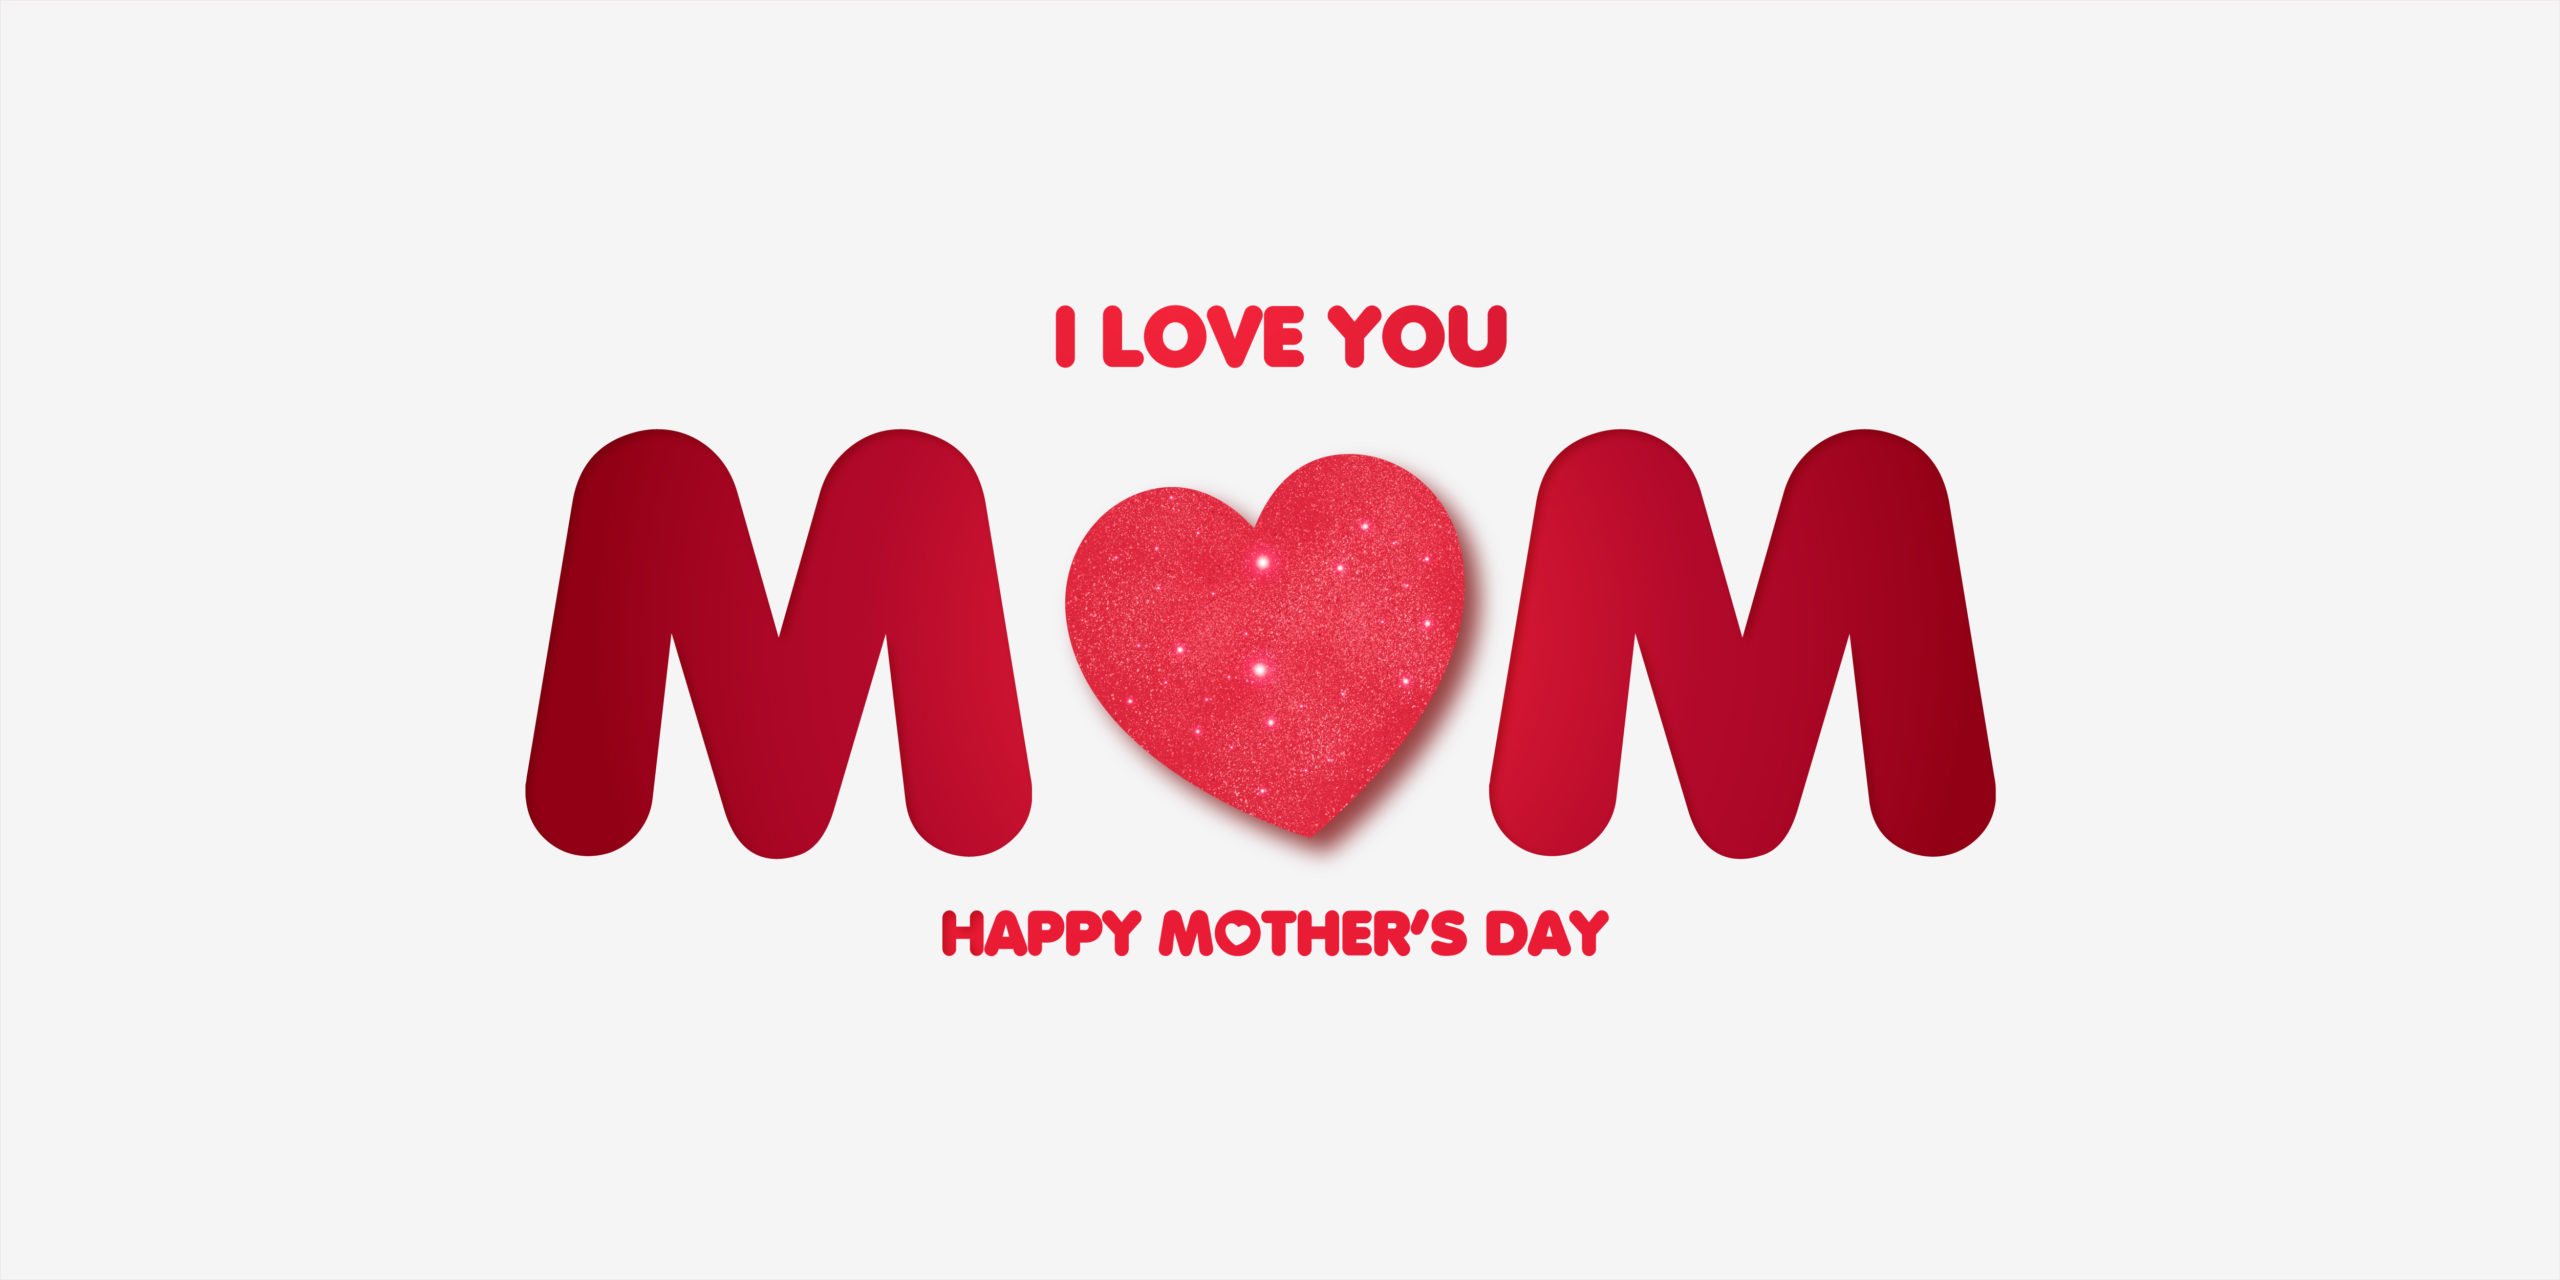 Happy Mother's Day 2021 WhatsApp Status video Download in English, Hindi, Tamil, Telugu, and Malayalam